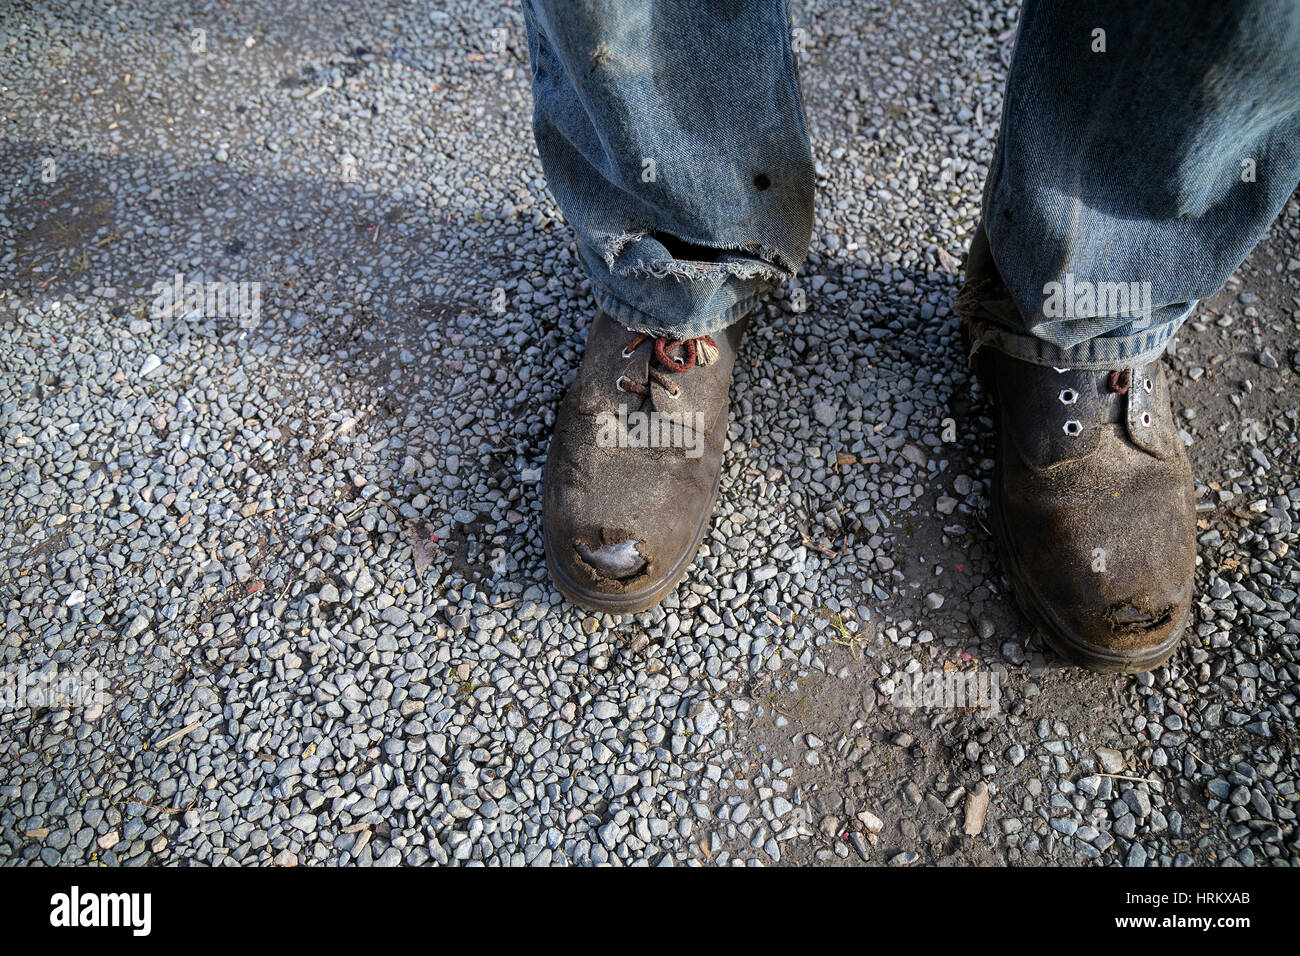 workman's boots